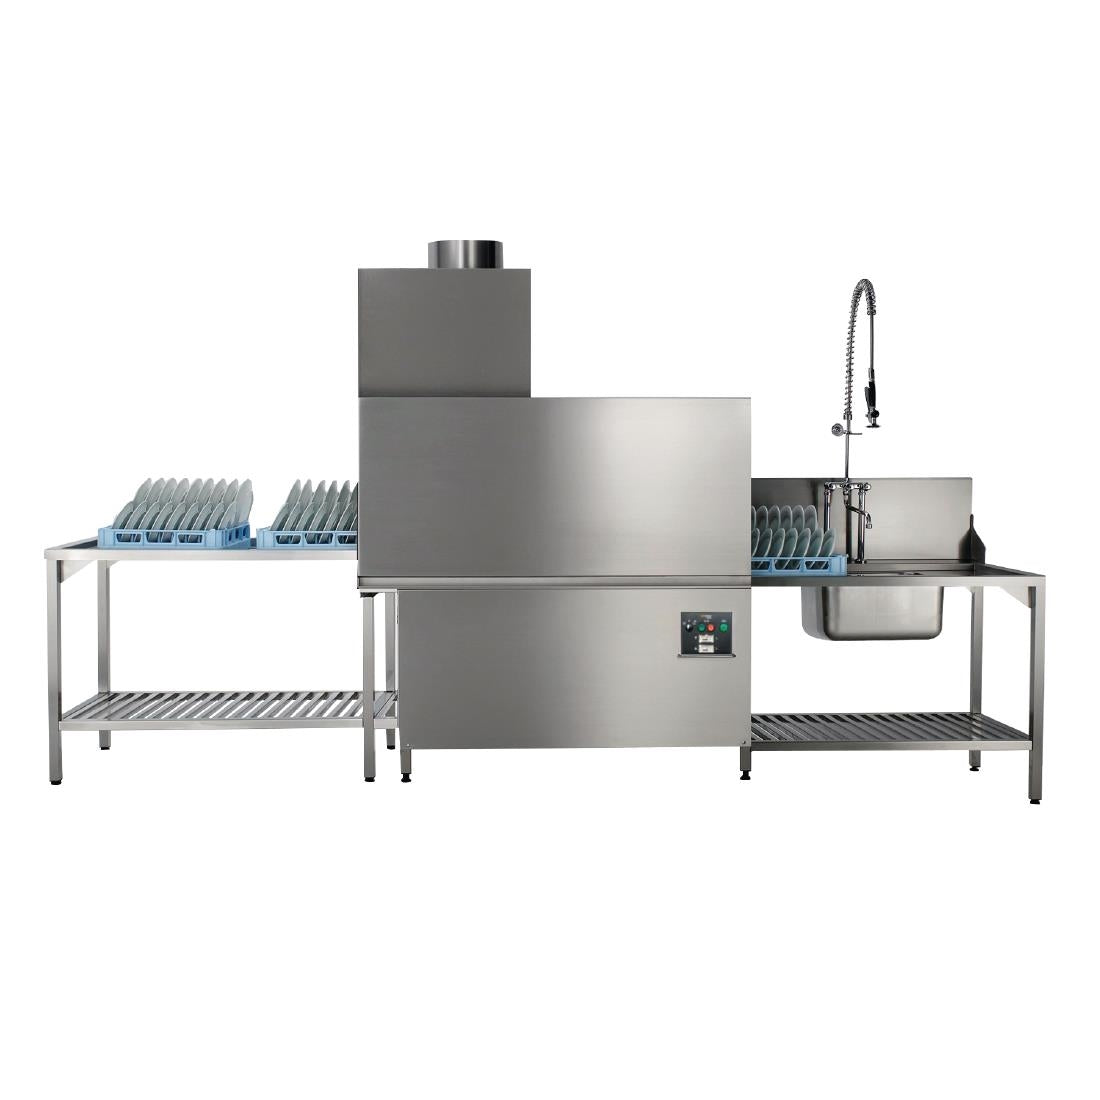 DW266 Hobart Ecomax Plus Conveyor Dishwasher Hot Feed C815-A